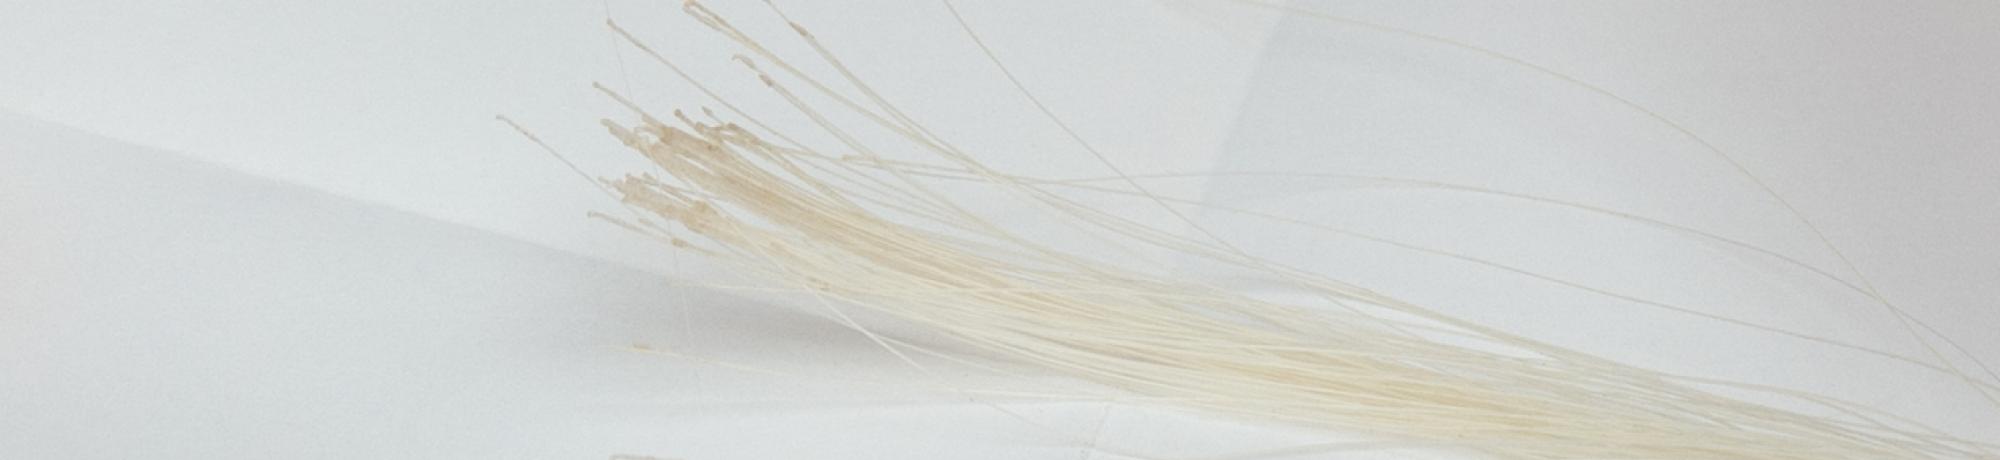 A sample of animal hair. Banner image courtesy of Katy Robertson.